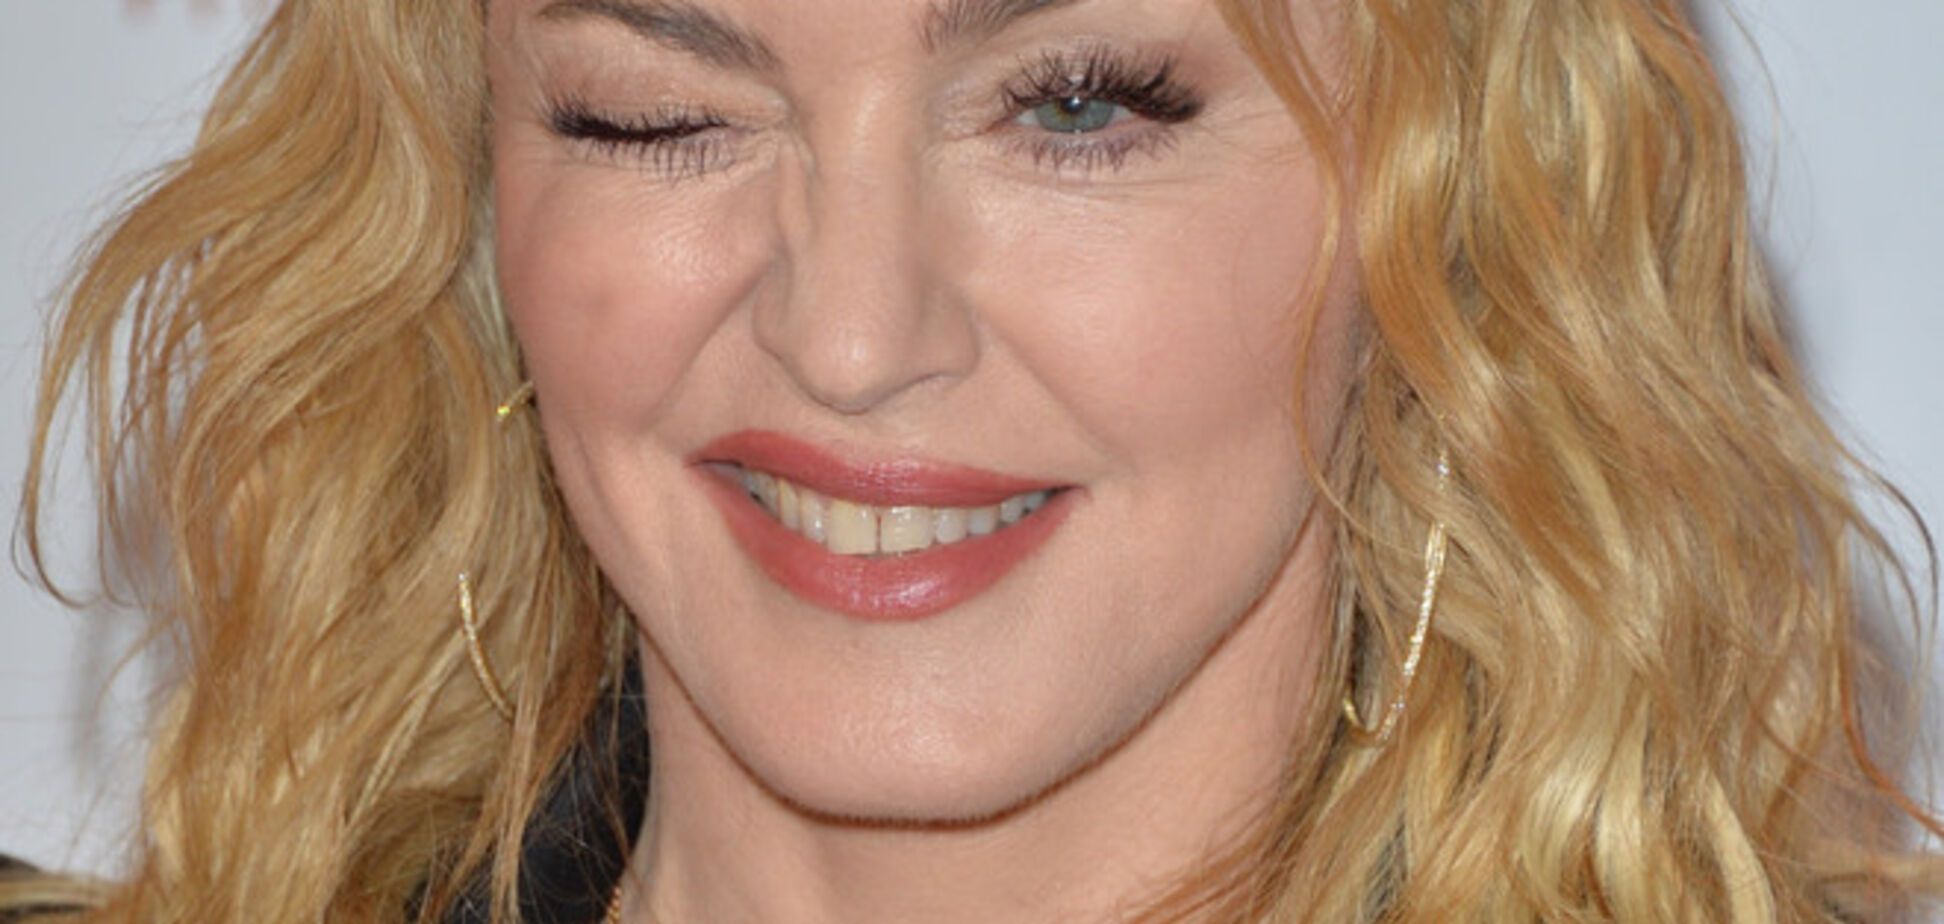  Мадонна вставила в нос кольцо в виде креста